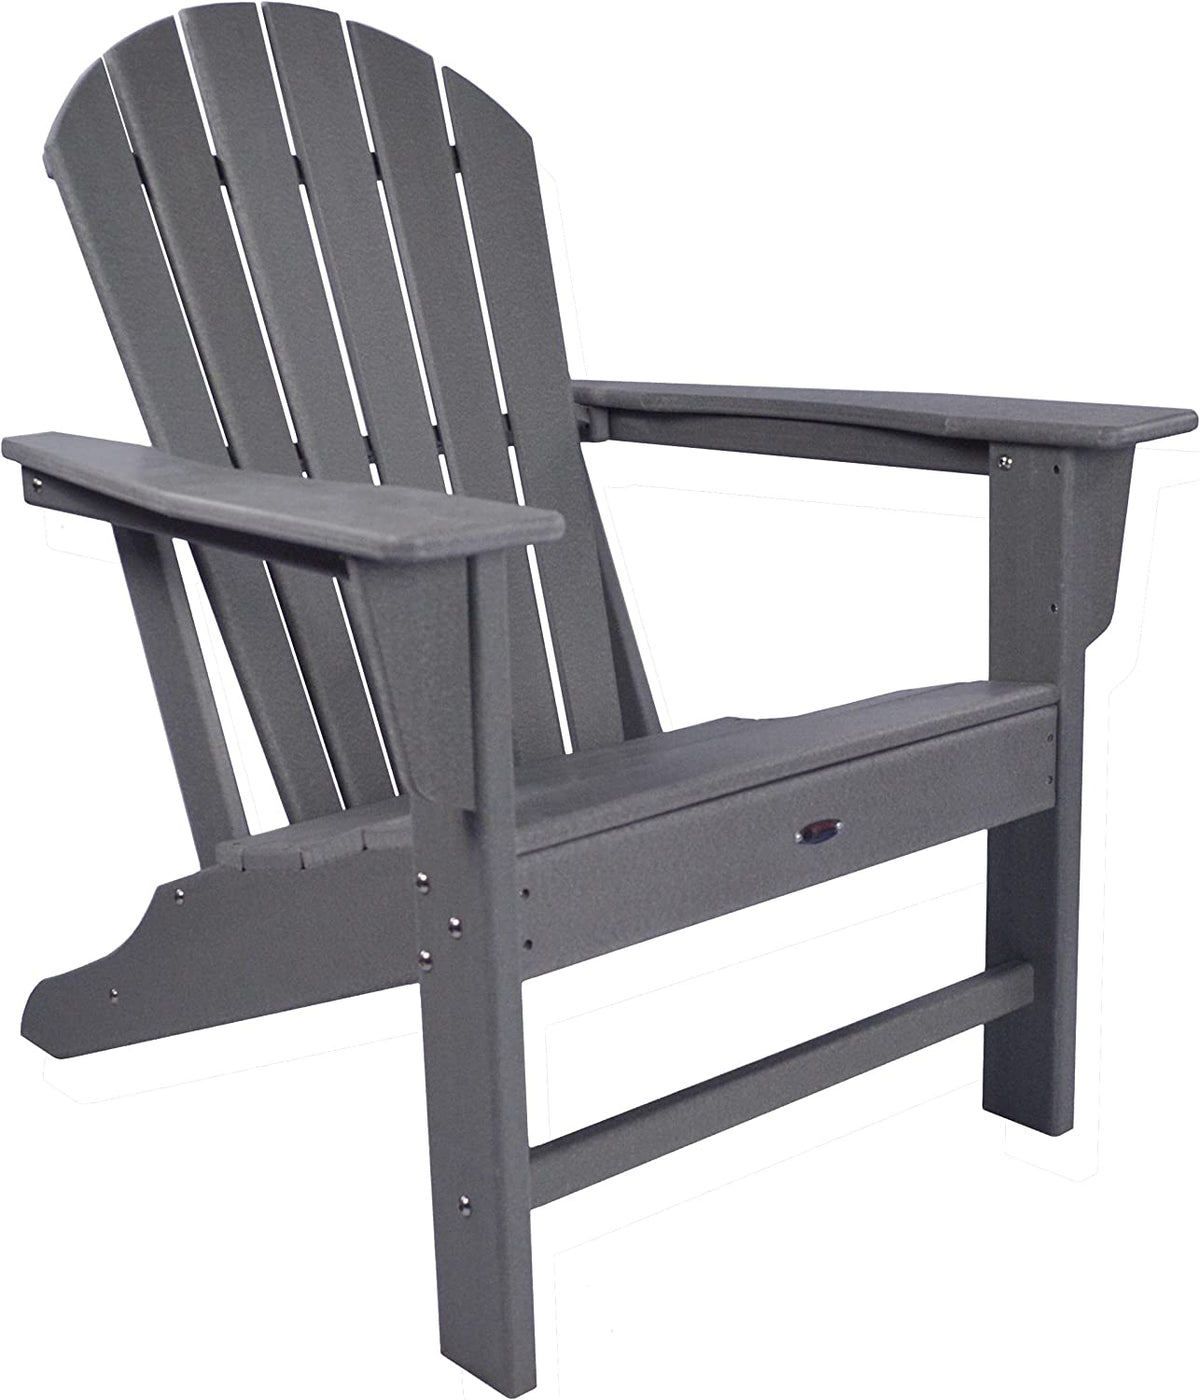 Adirondack Chair by Atlas, Surf City - Grey